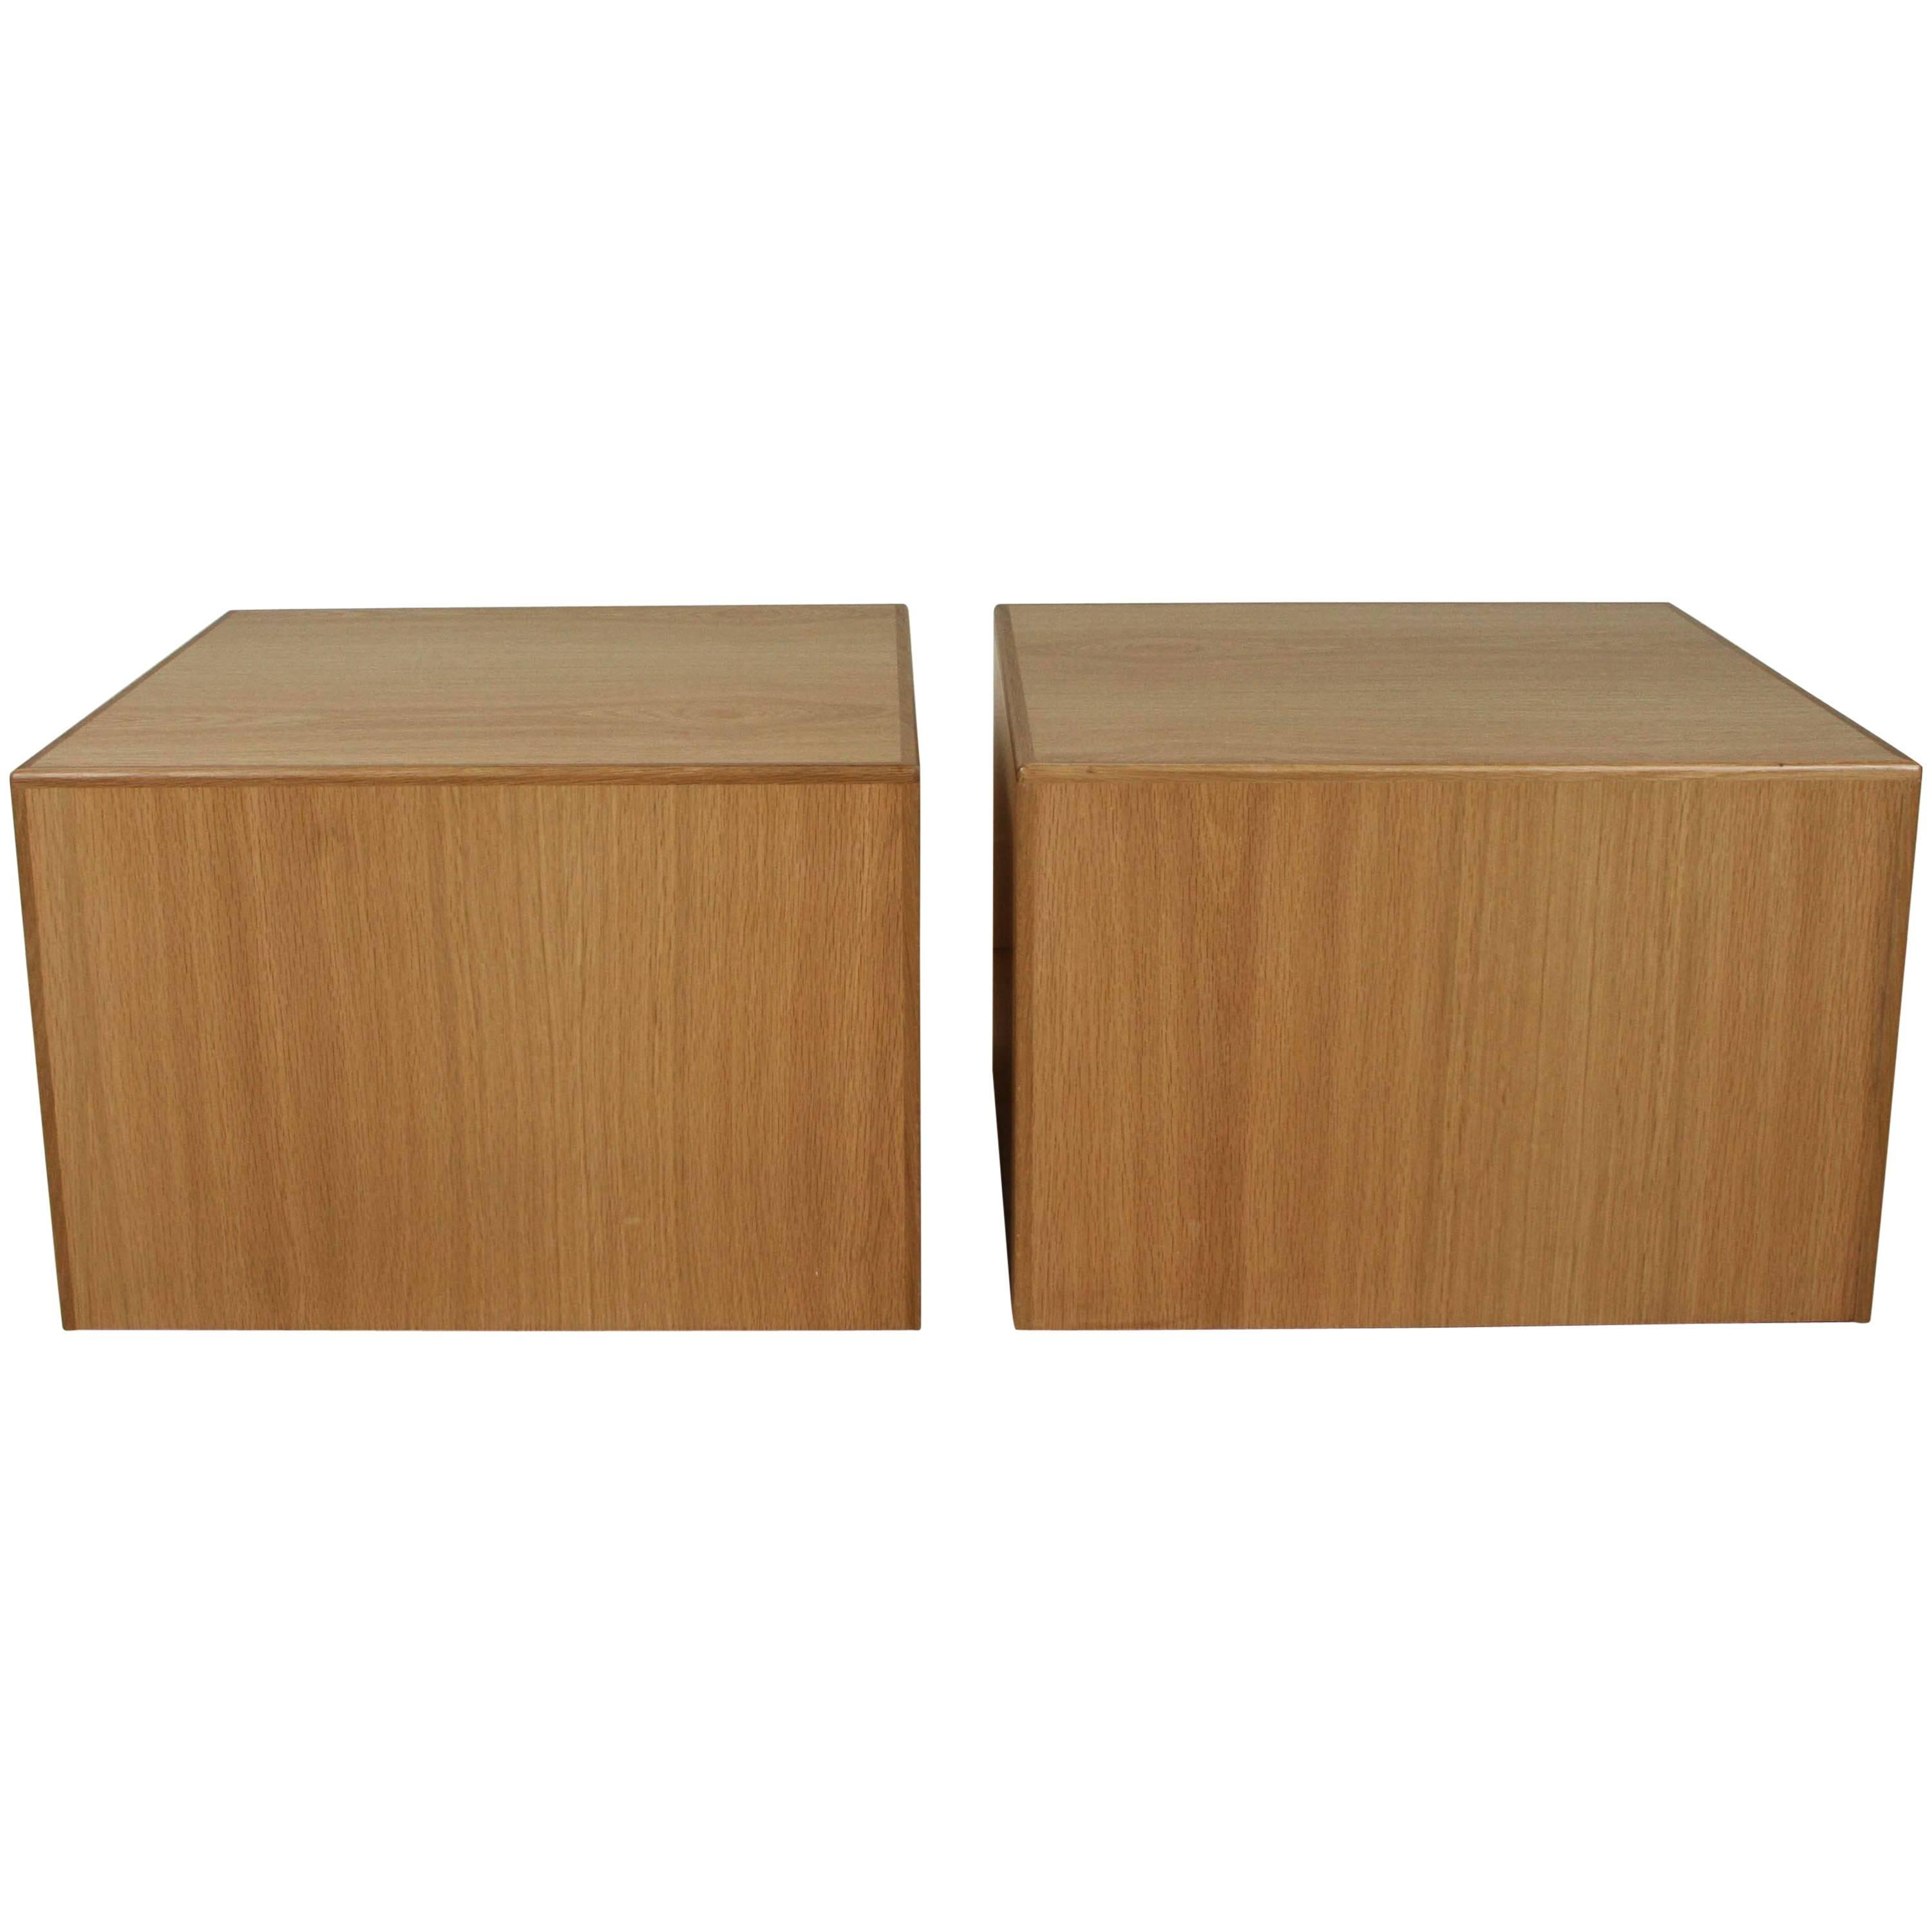 Large Oak Cube Table by Lawson-Fenning